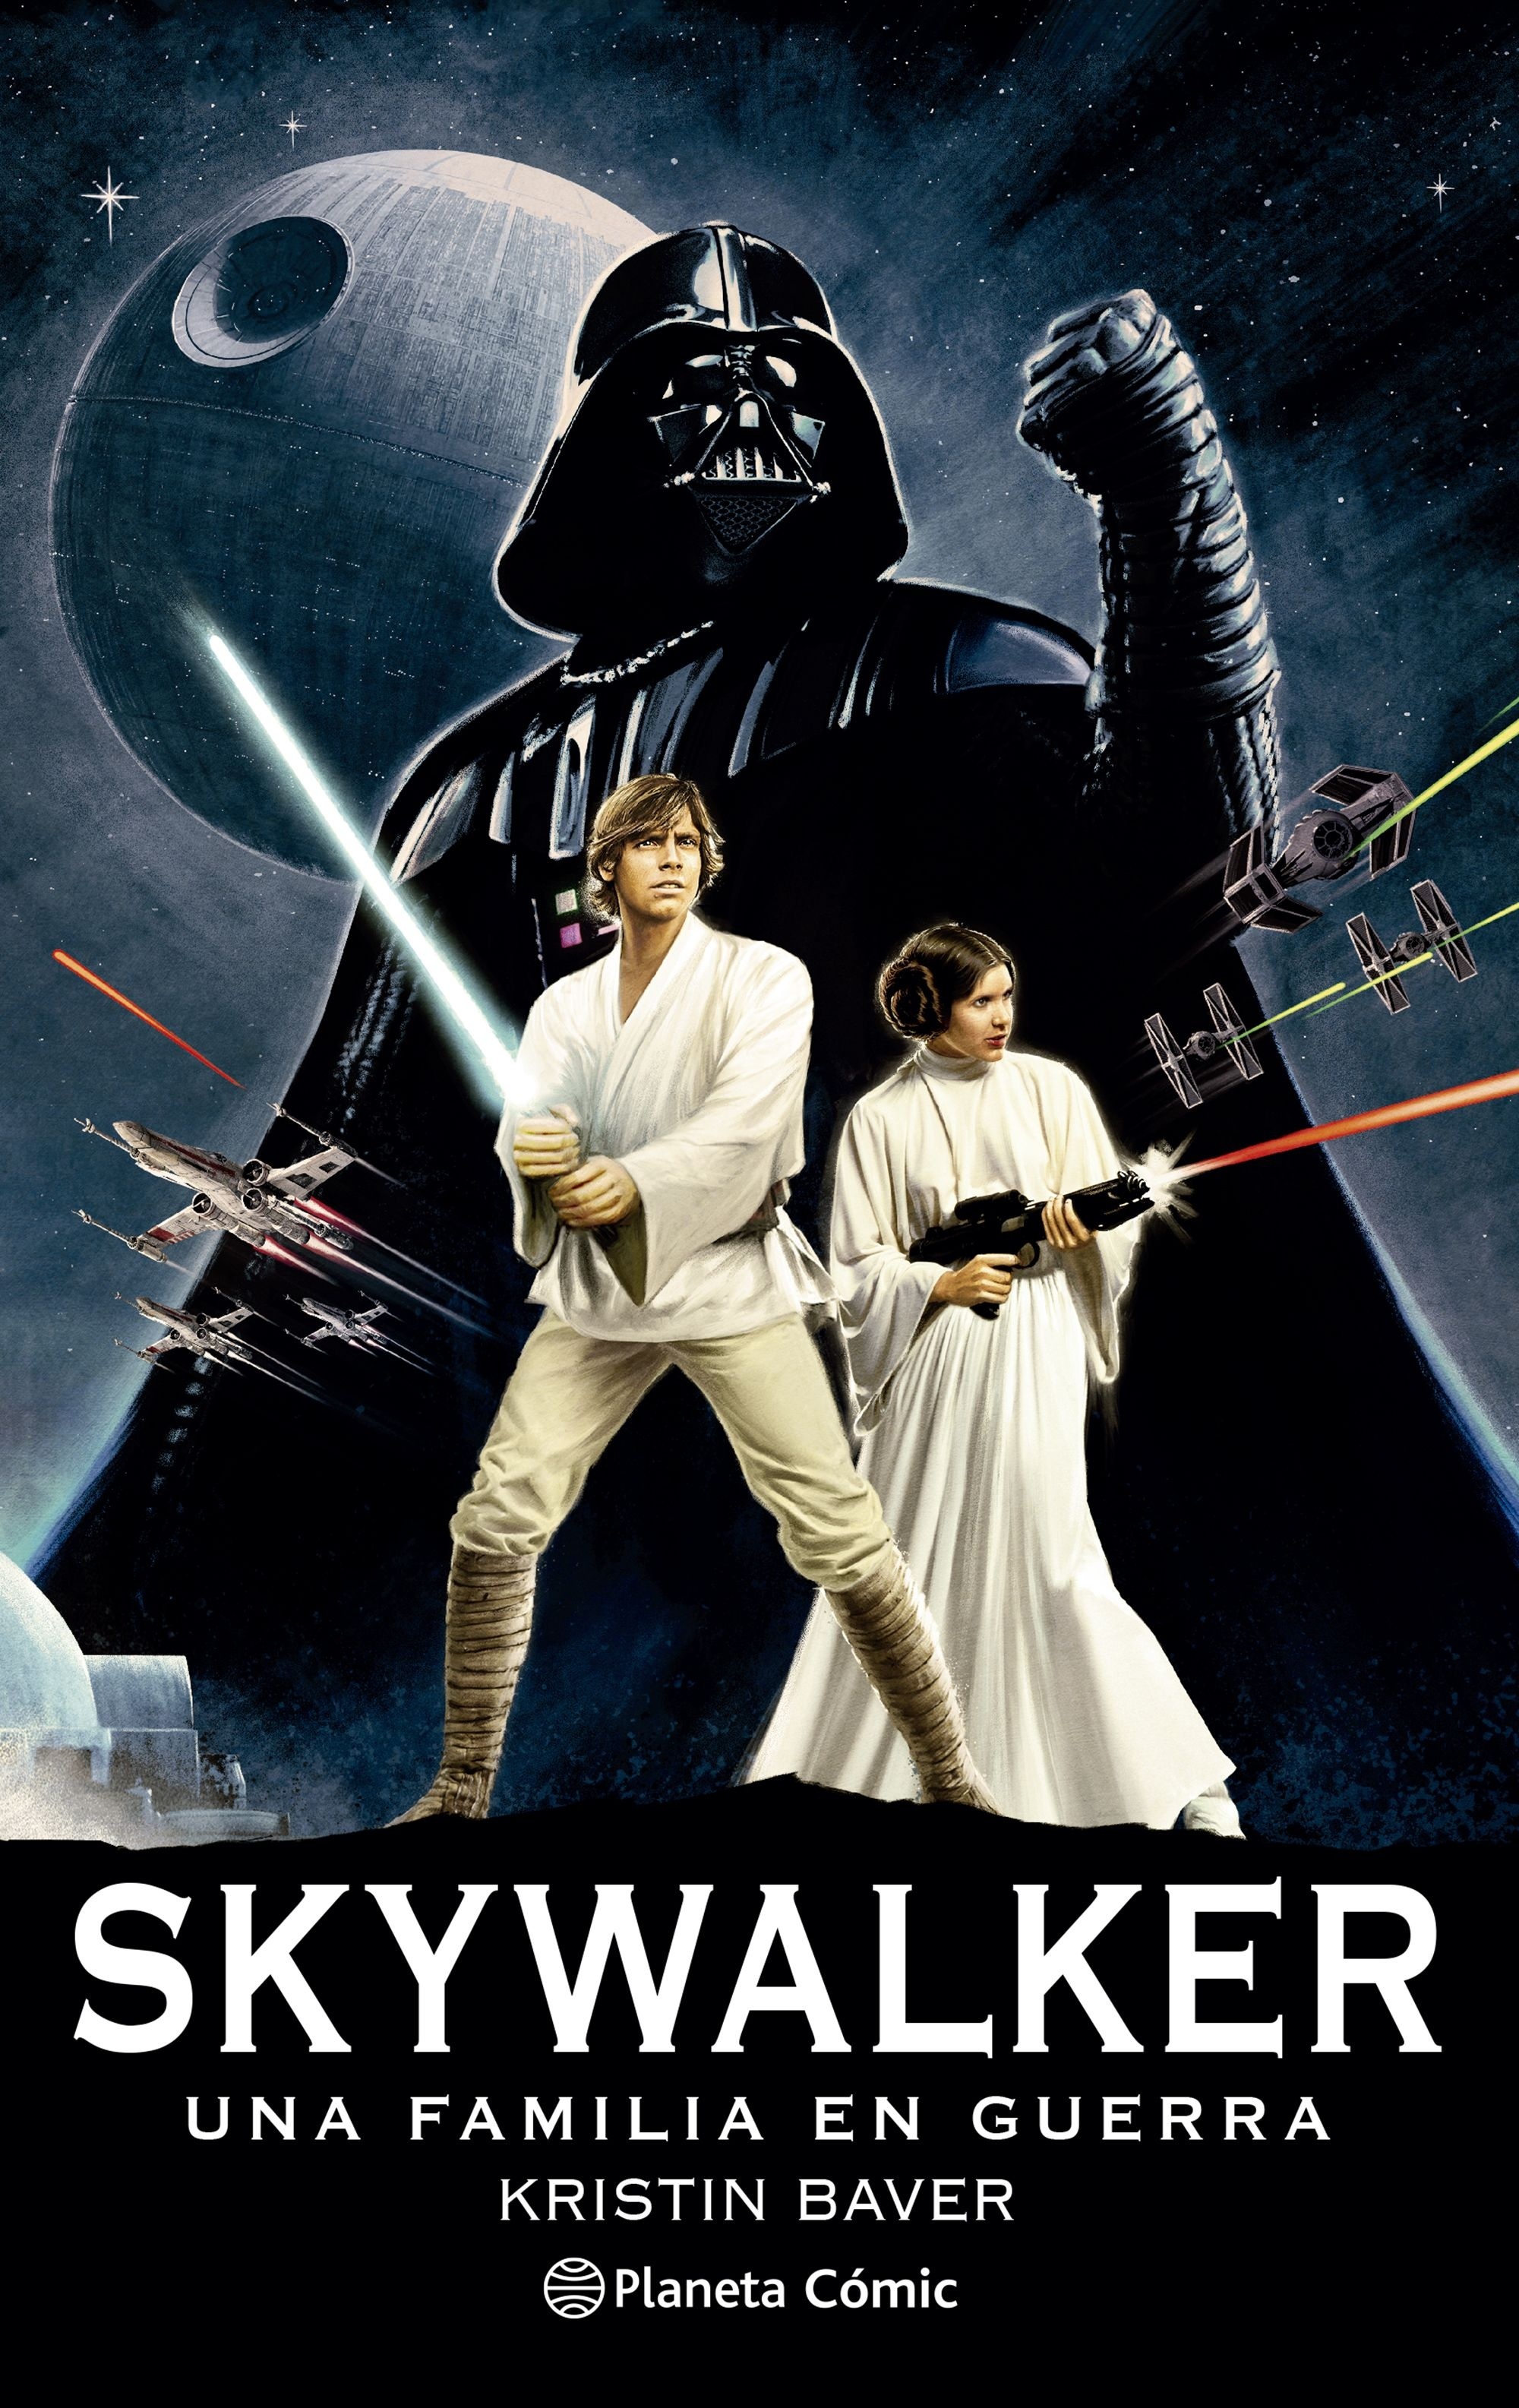 Star Wars Skywalker: Una familia en guerra